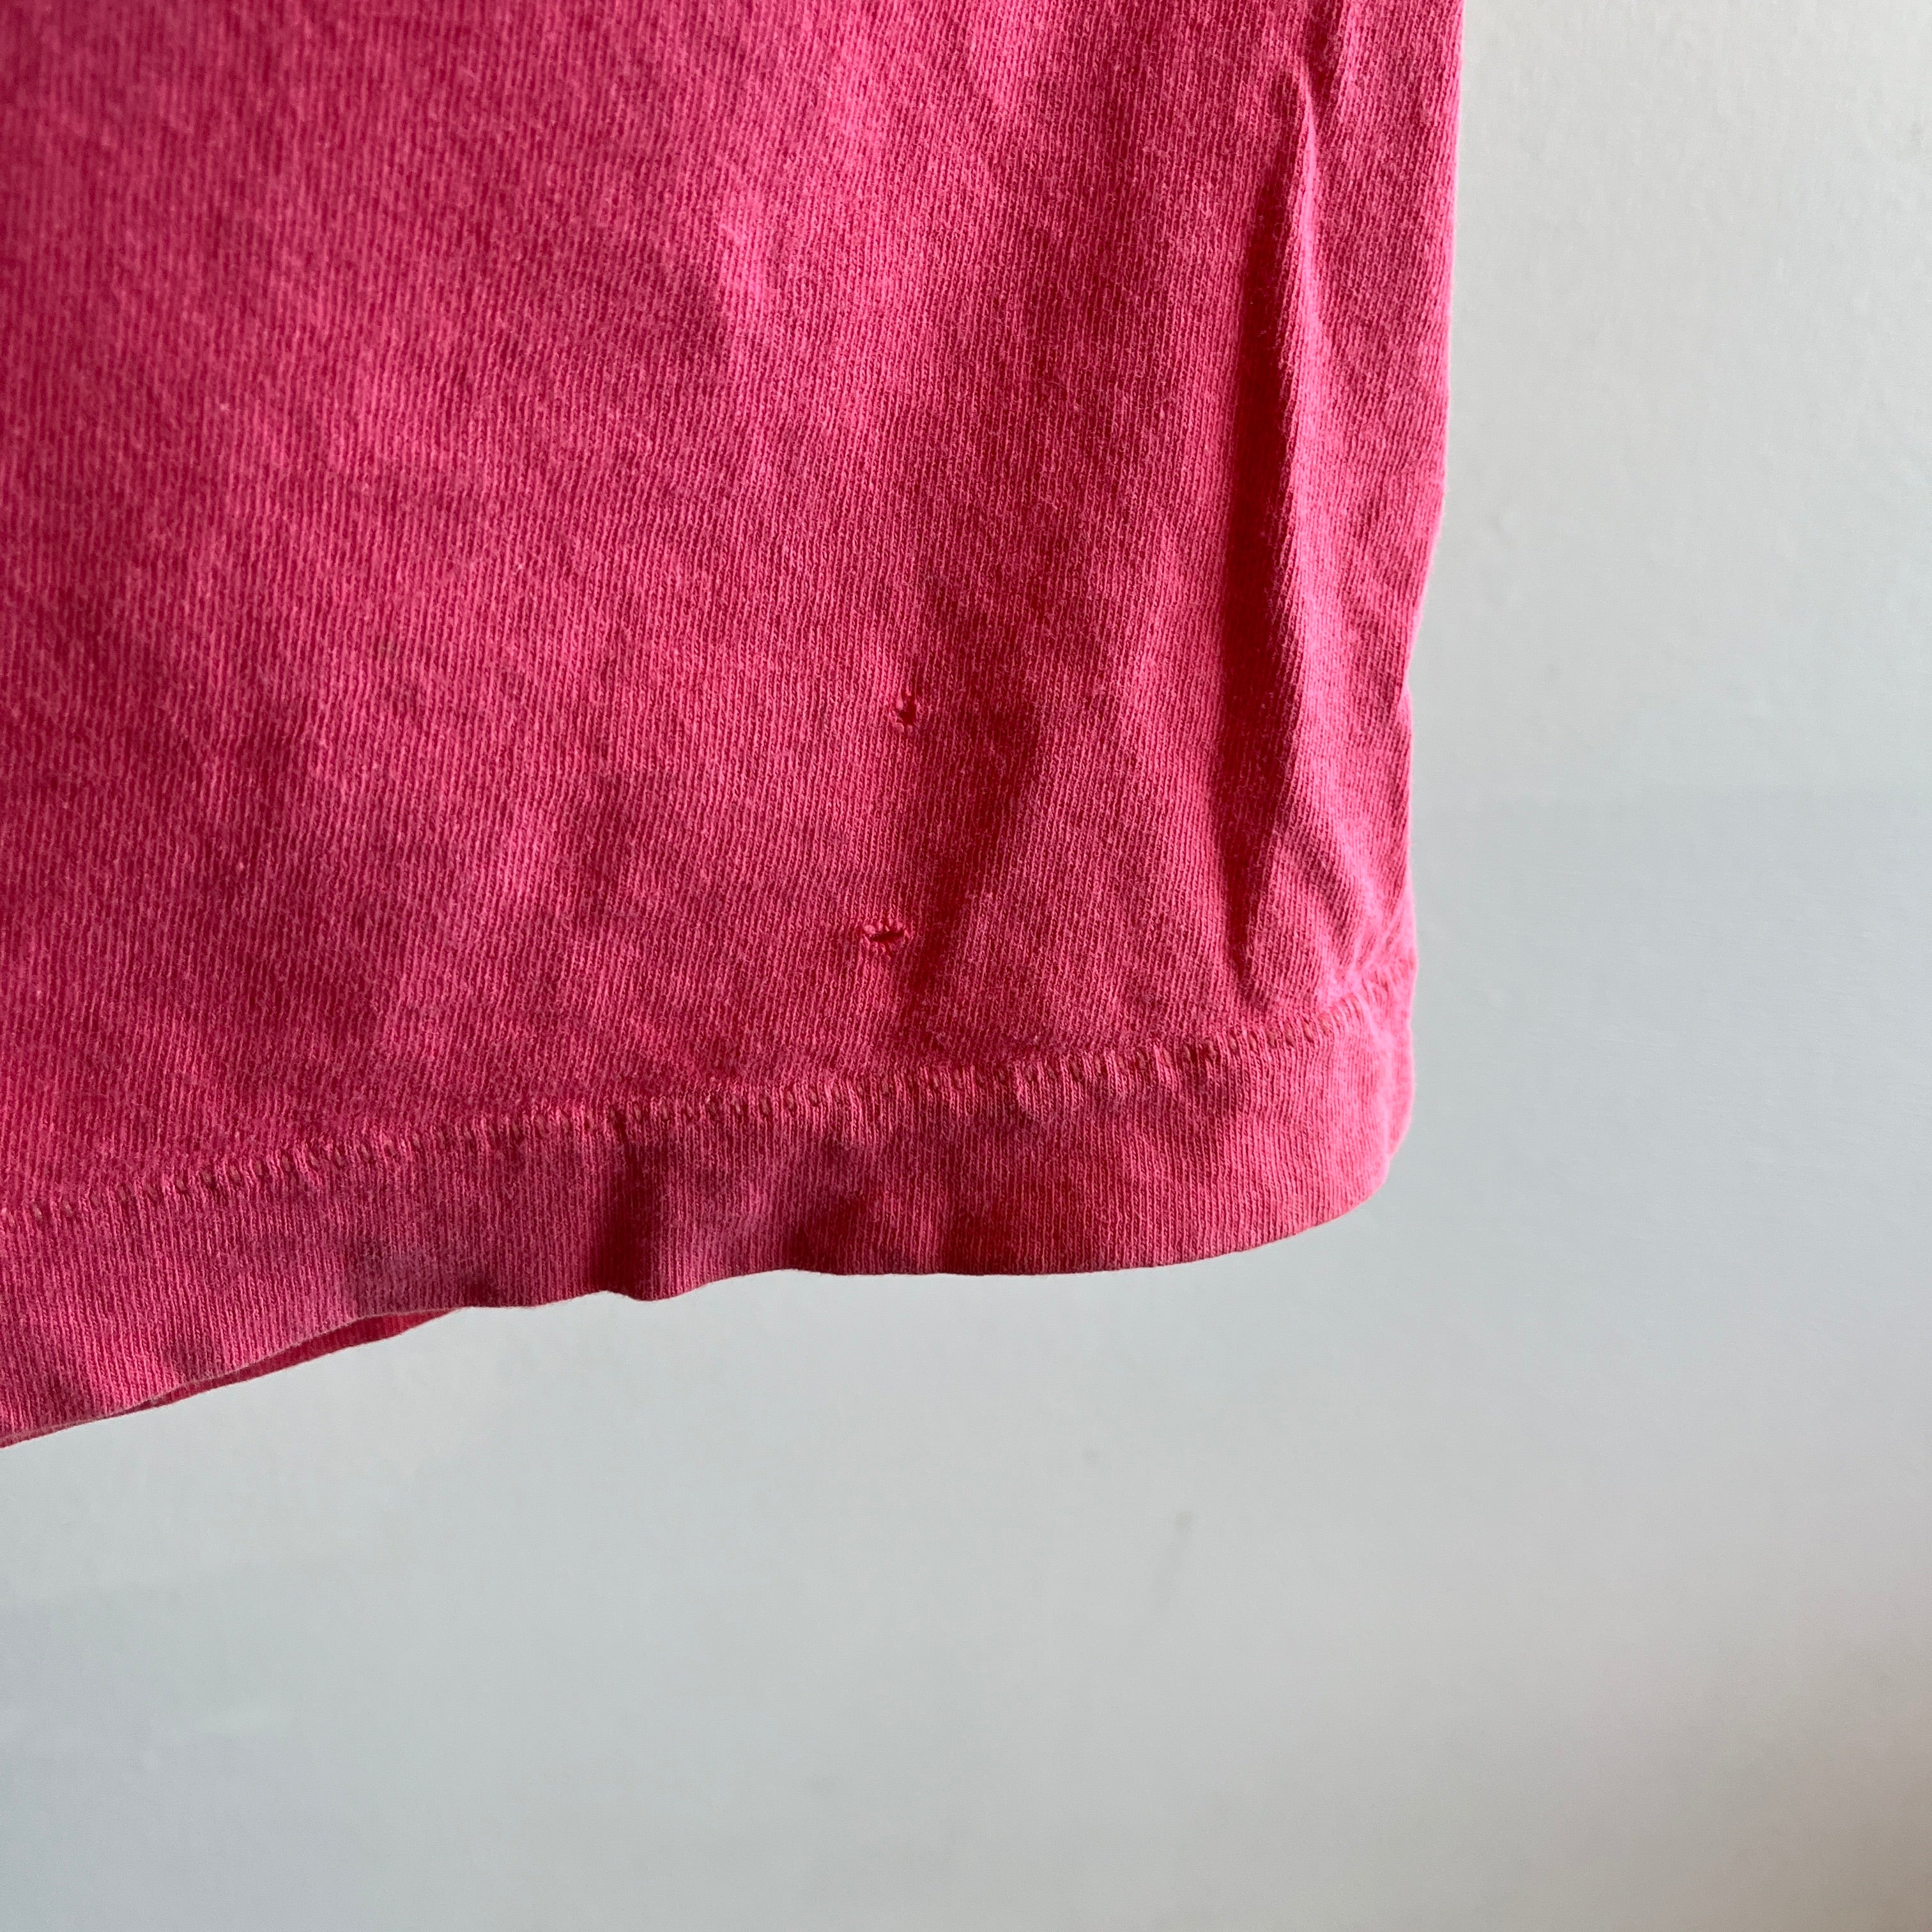 1980s Salmon Pink Pocket T-Shirt by FOTL